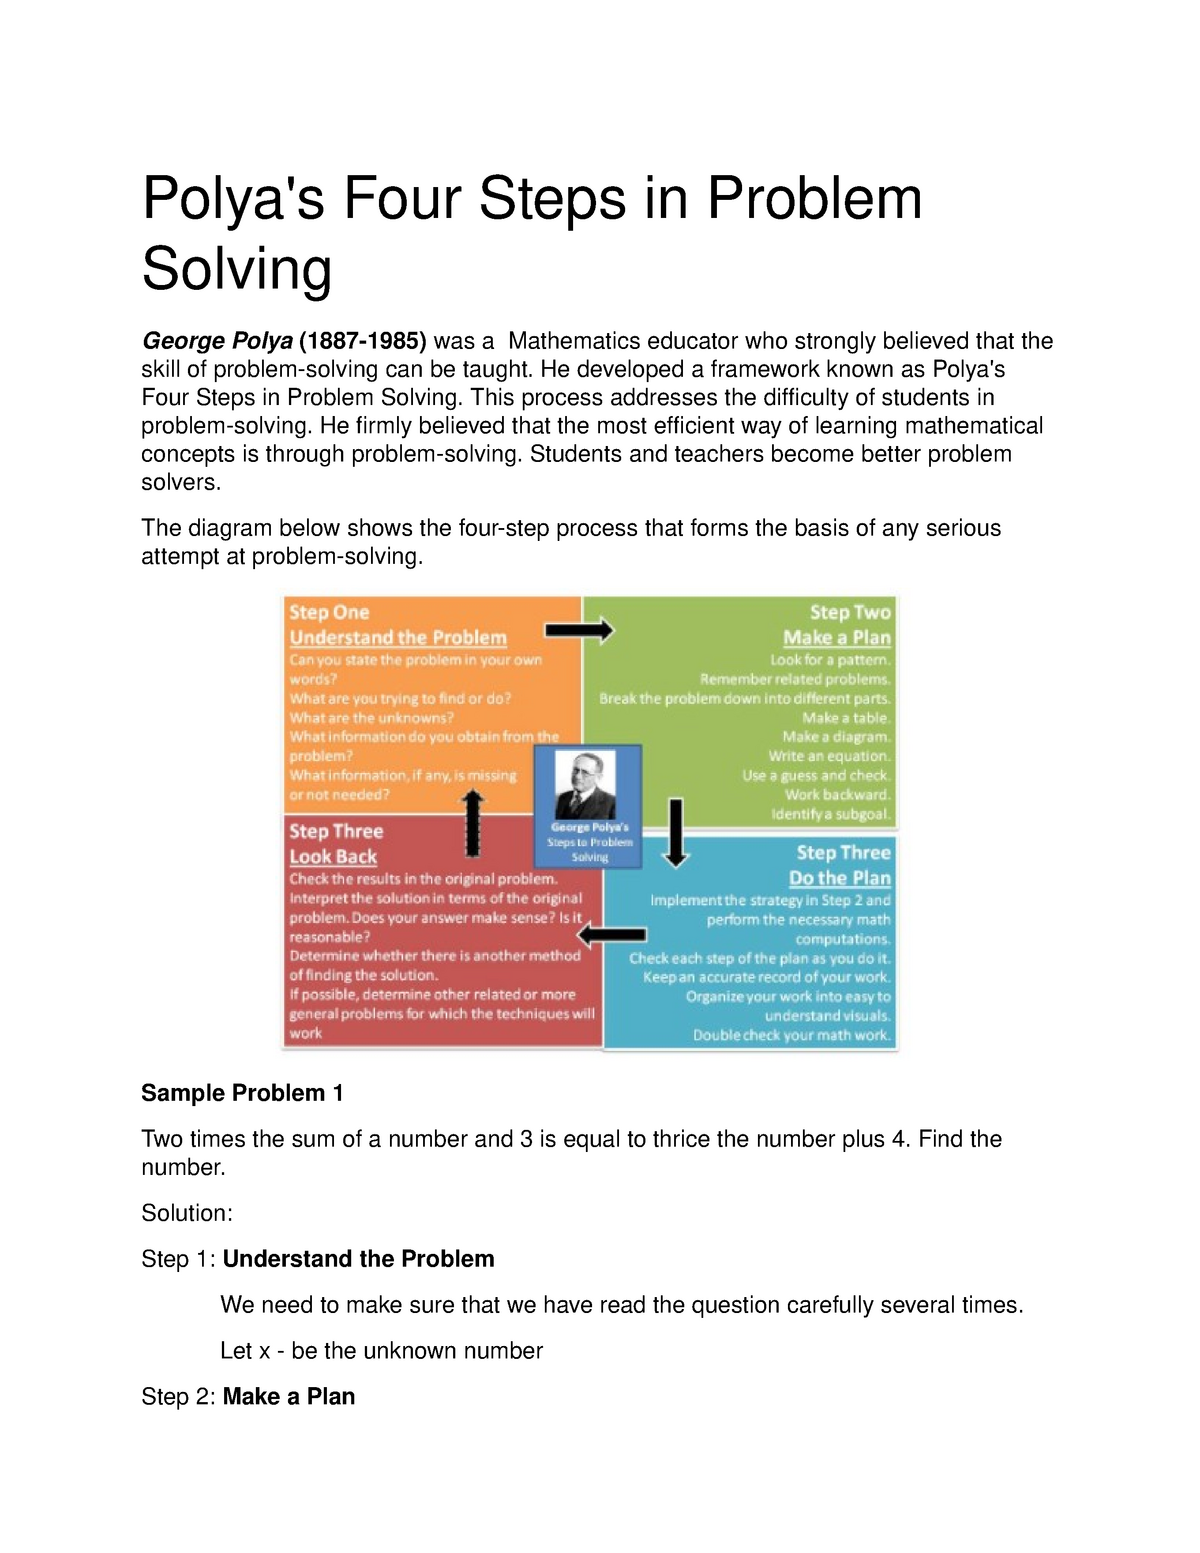 polya's four steps of problem solving